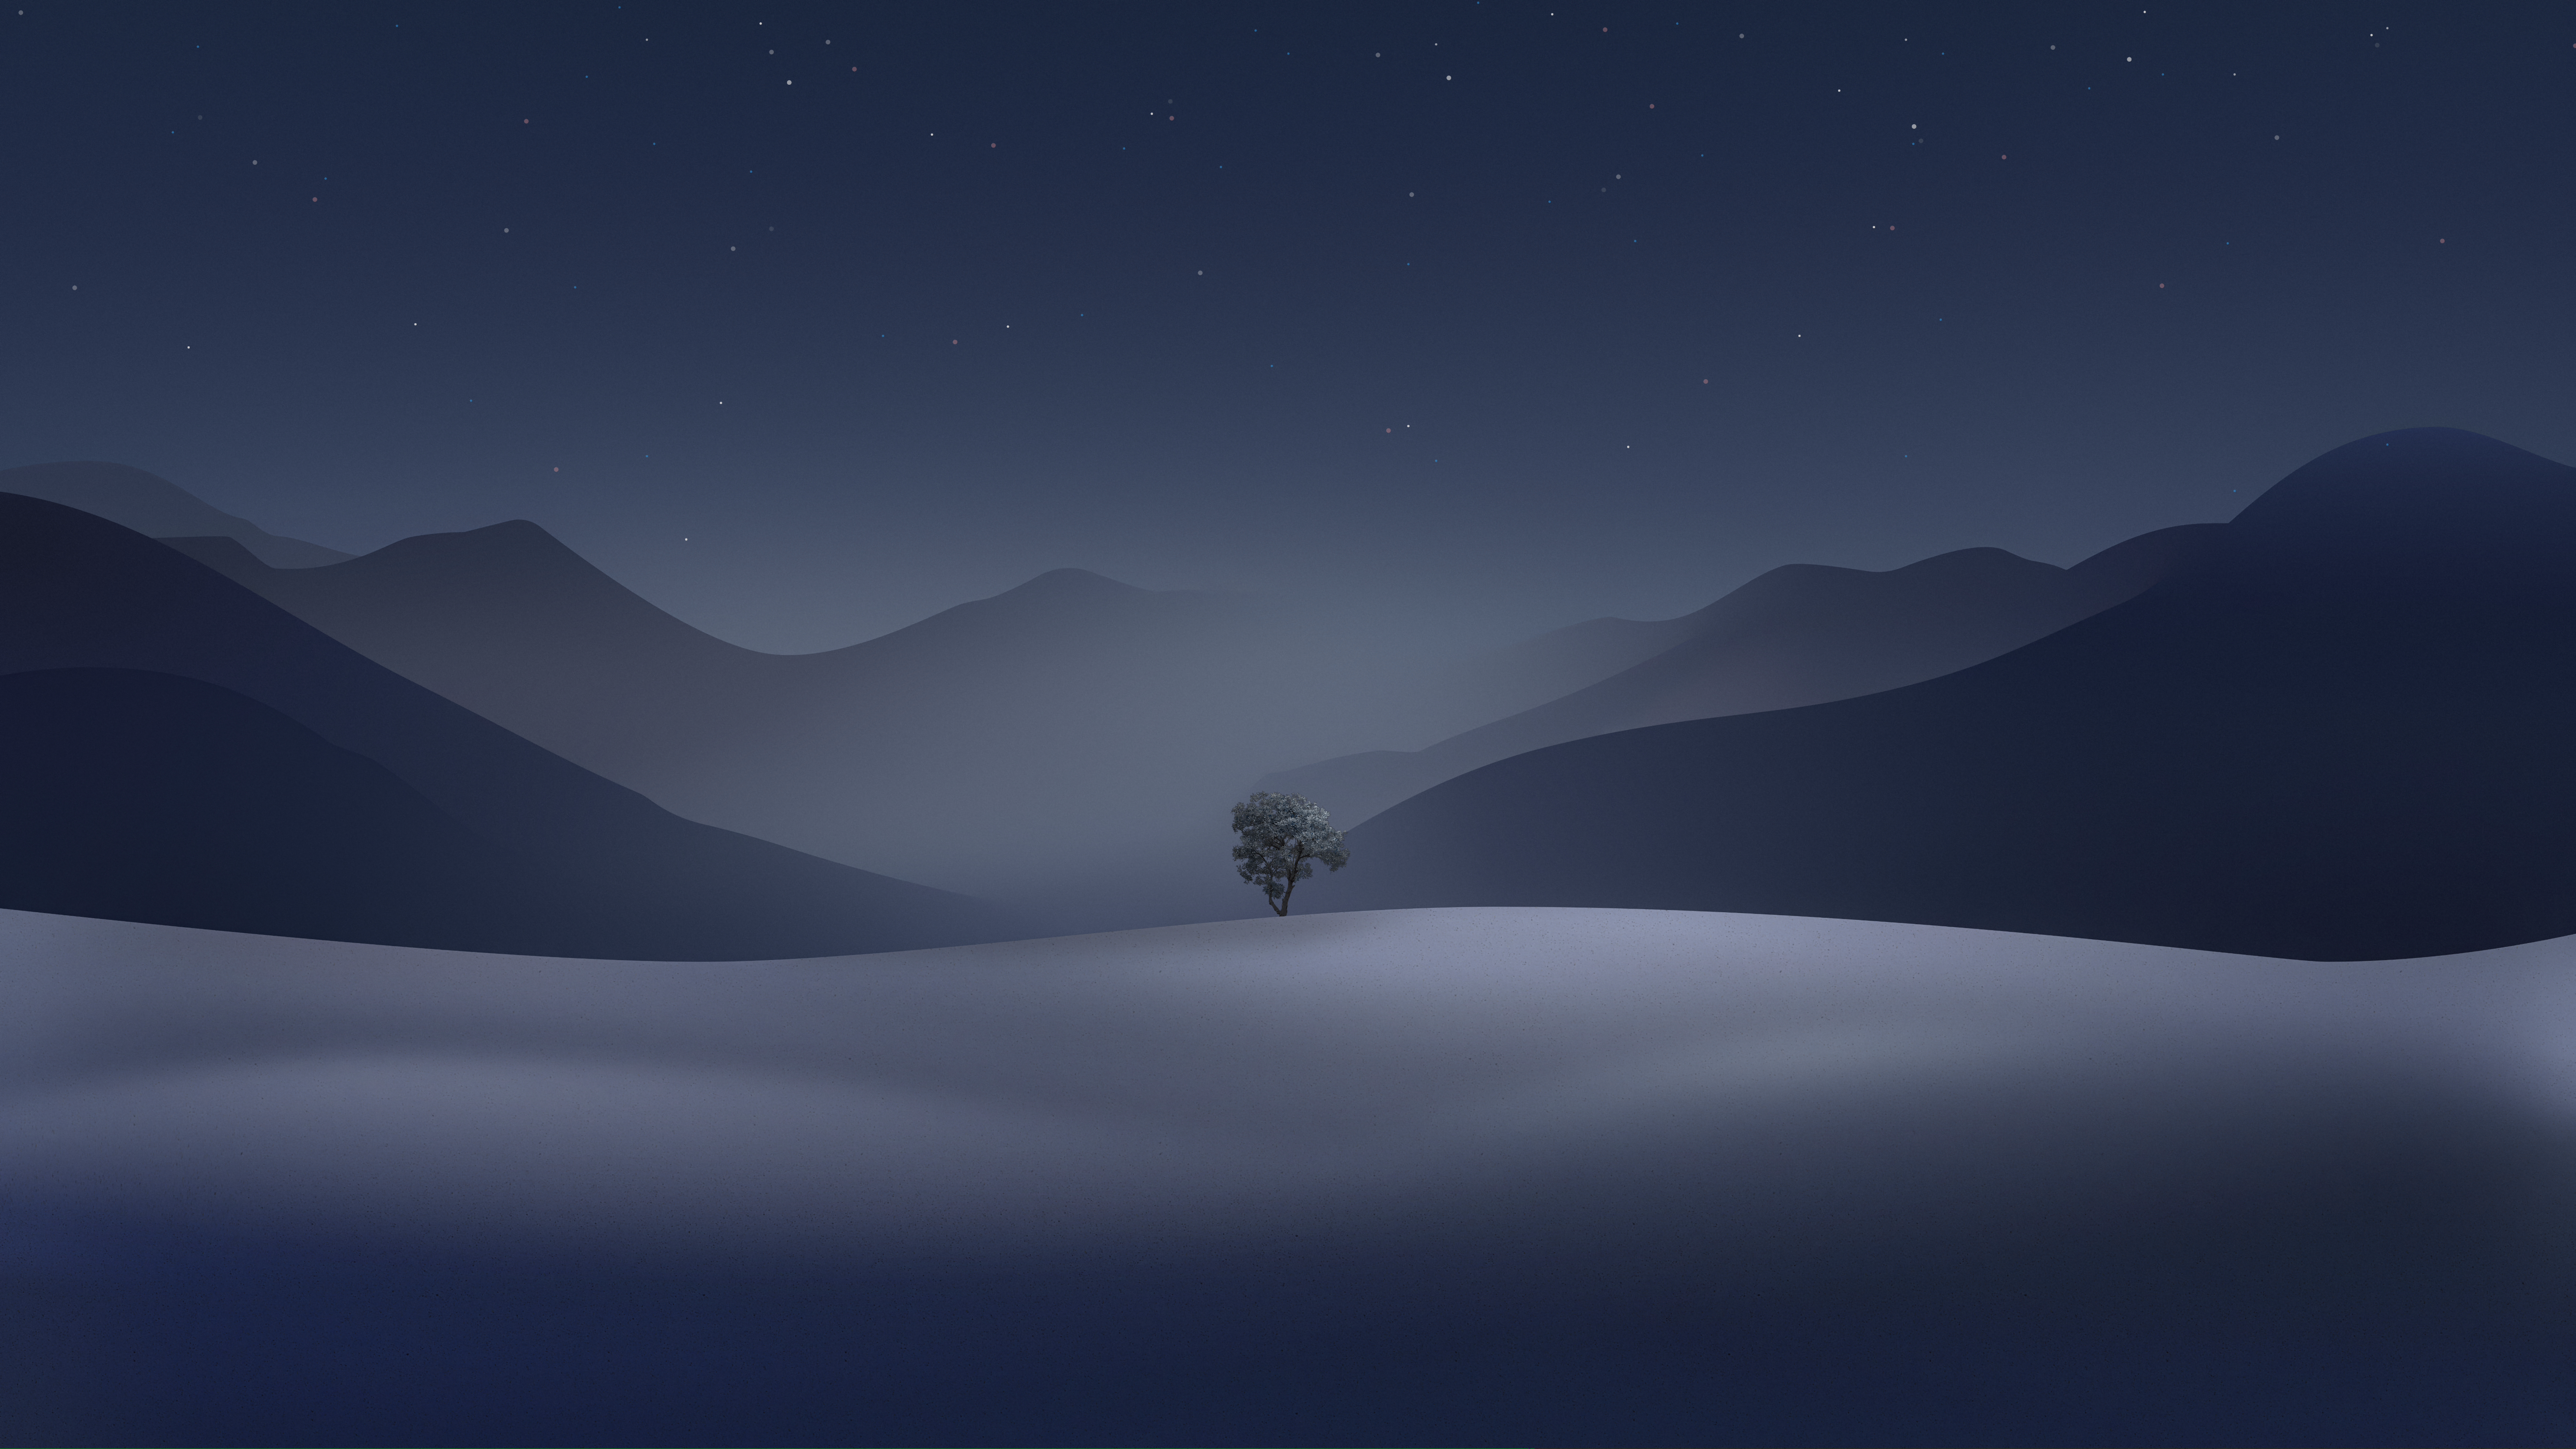 General 6016x3385 Basic apple guy digital art artwork illustration landscape night nightscape mountains field simple background minimalism trees nature stars sky